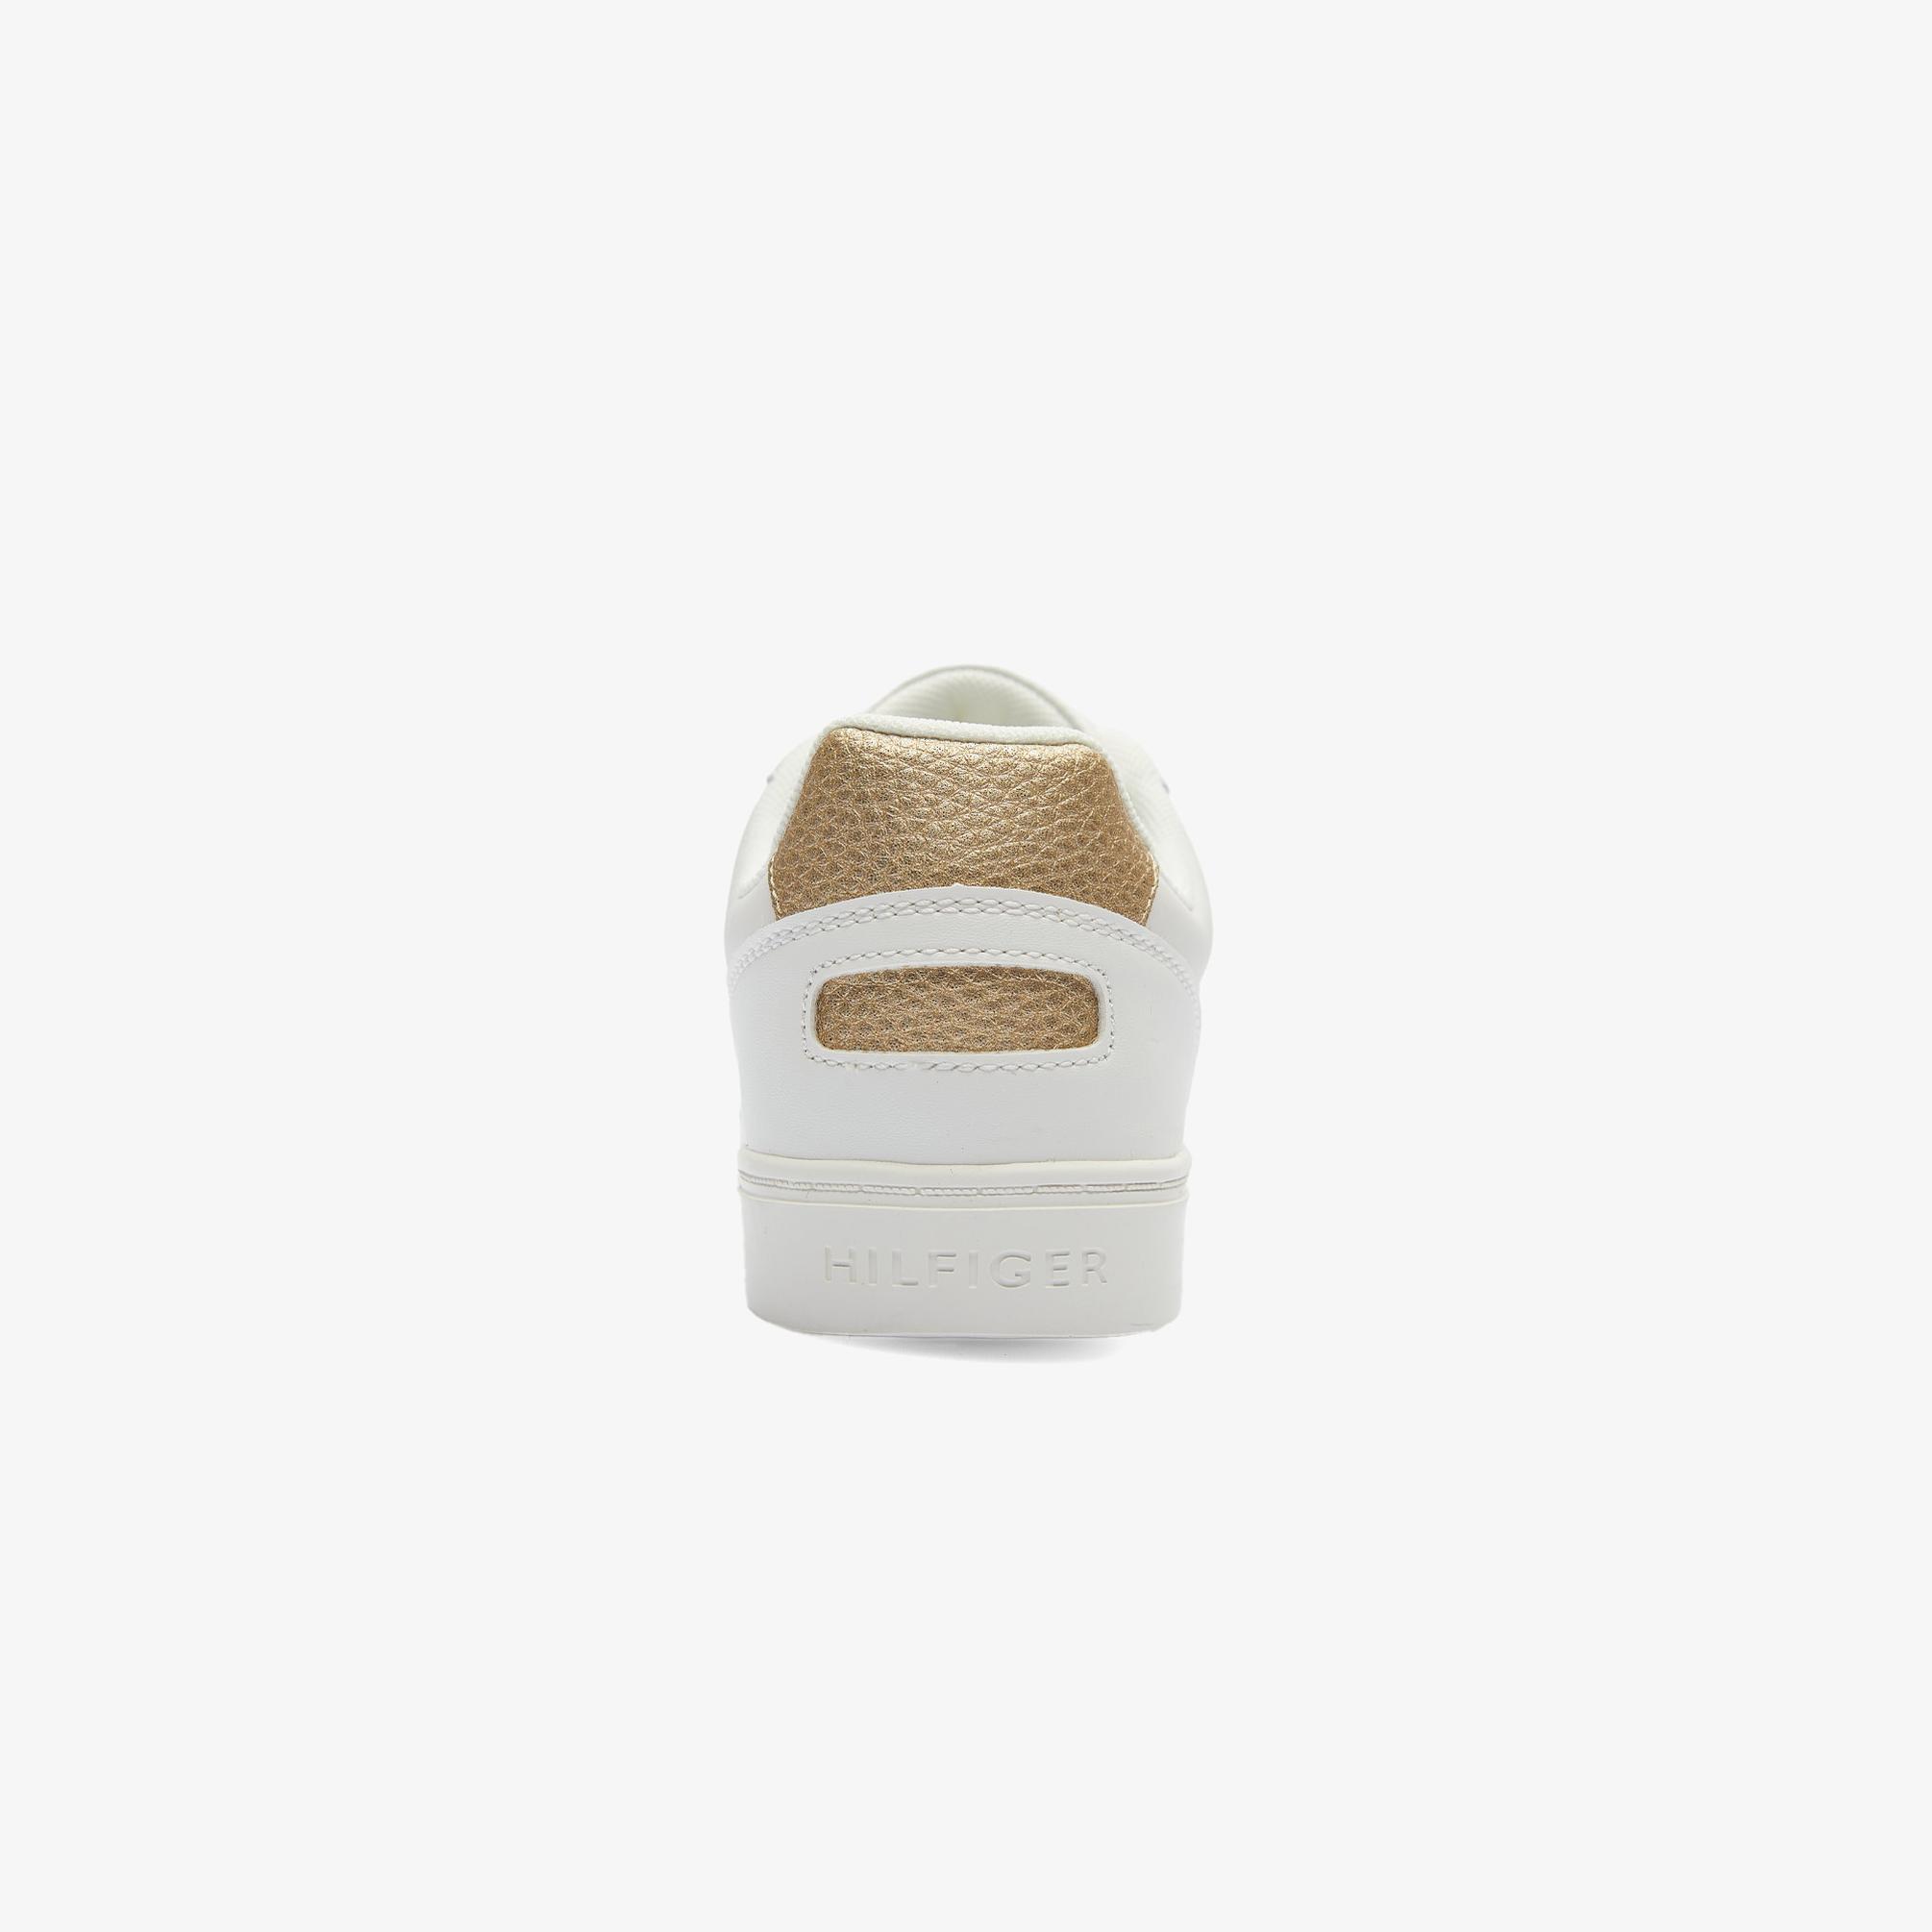  Tommy Hilfiger Essential Cupsole Gold Kadın Beyaz Sneaker